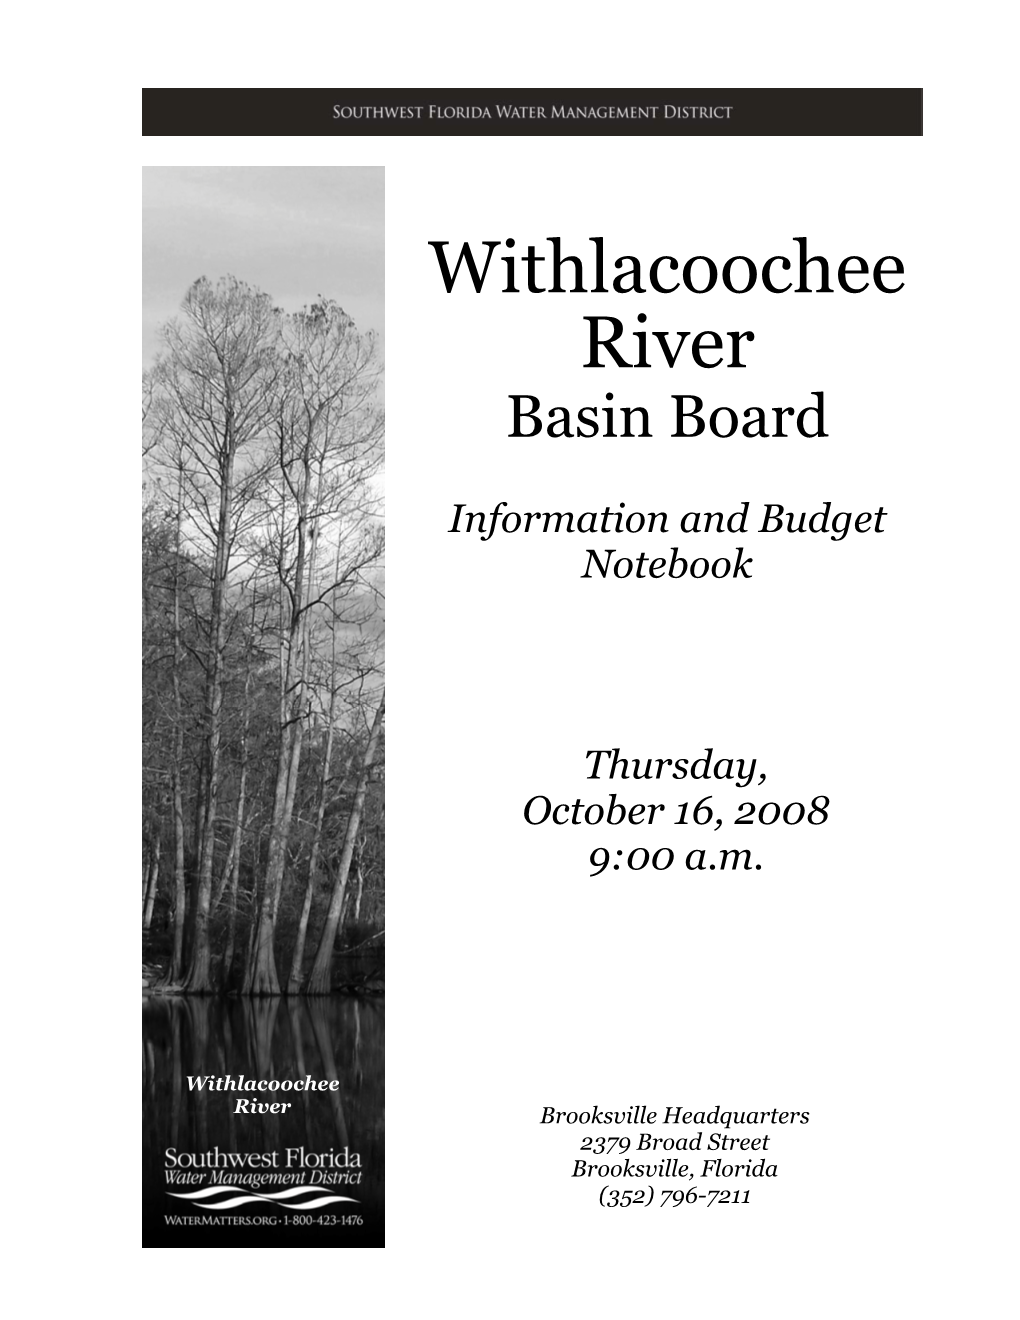 Withlacoochee River Basin Board